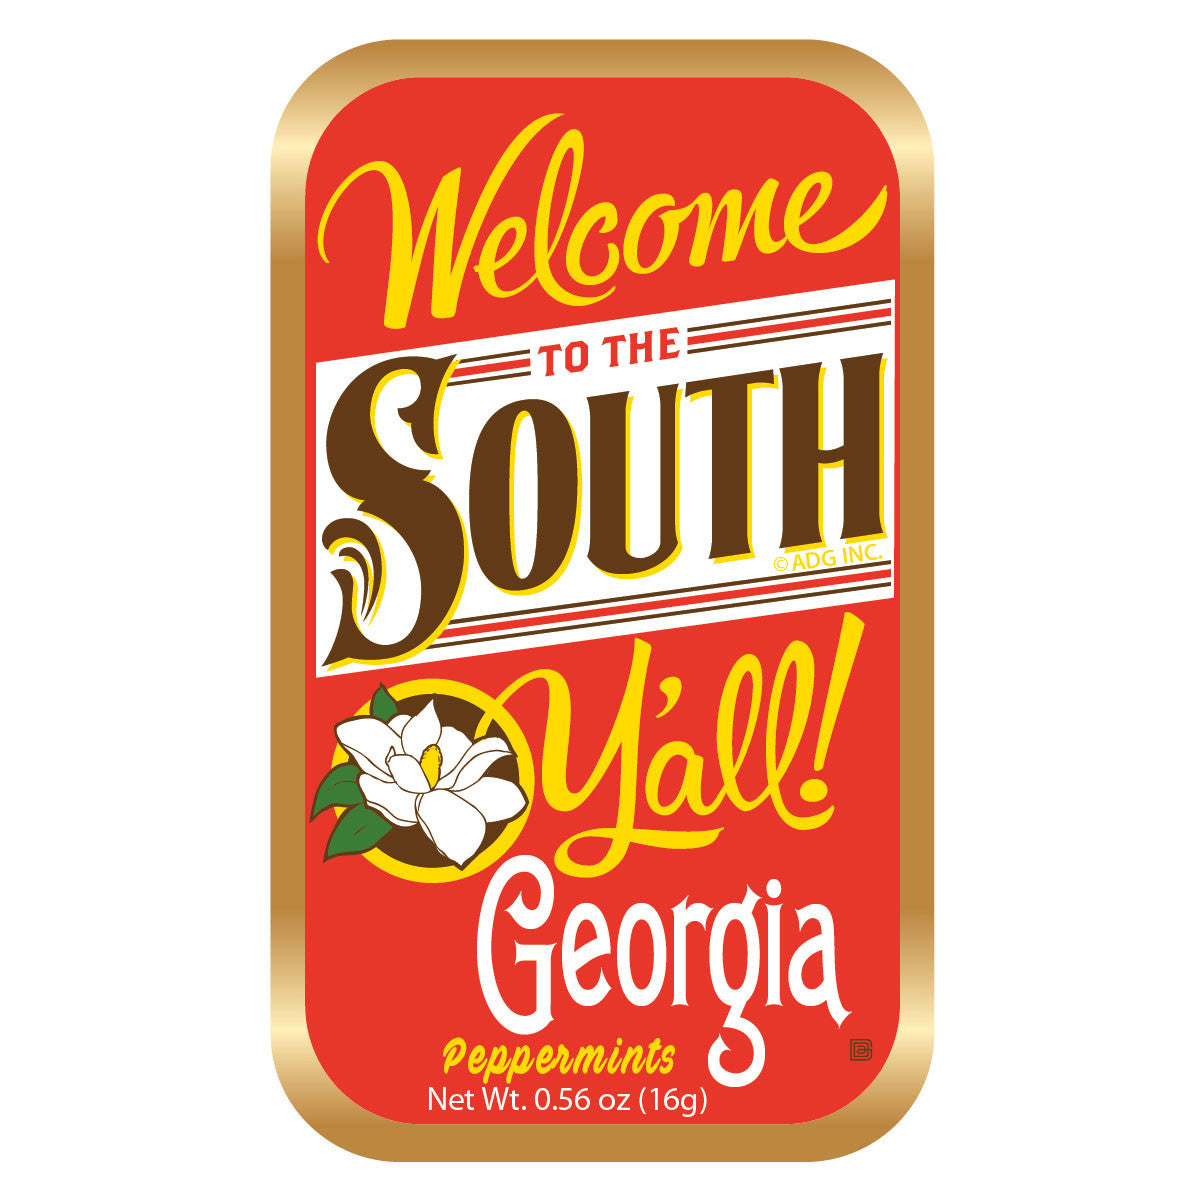 The South Y'All Georgia - 1298A